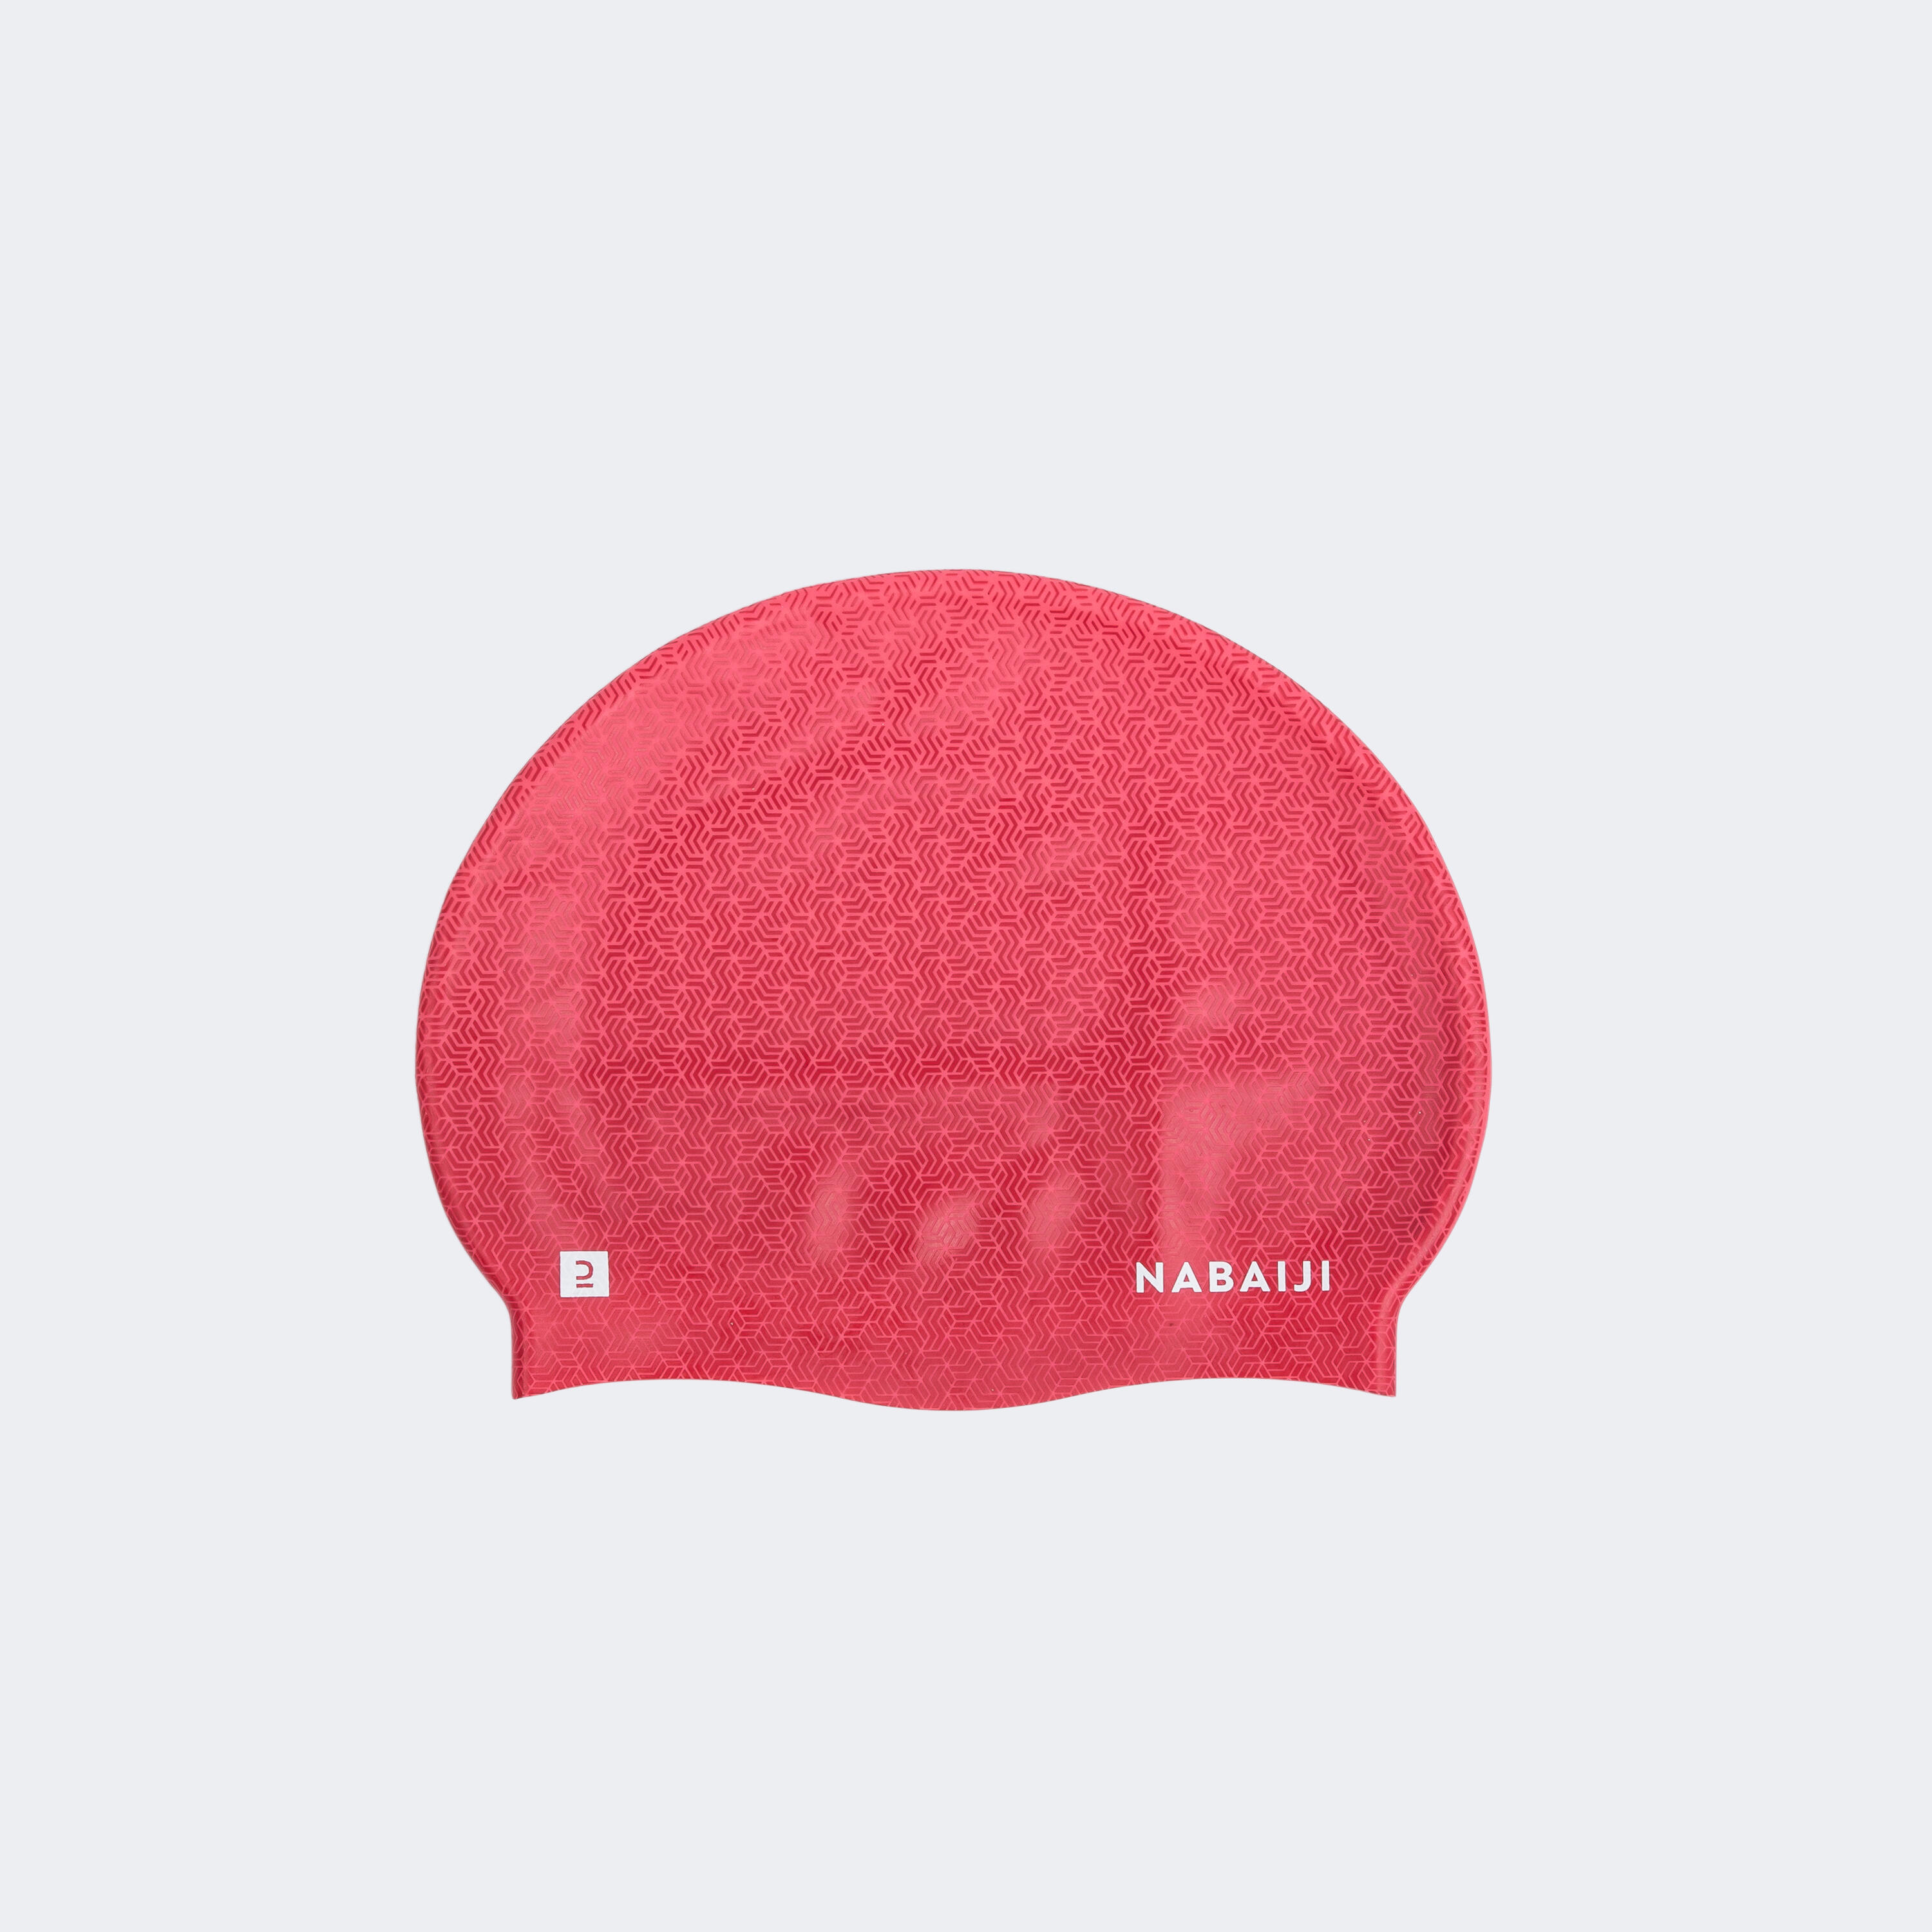 NABAIJI SILICONE swim cap - One size - Geo red pink